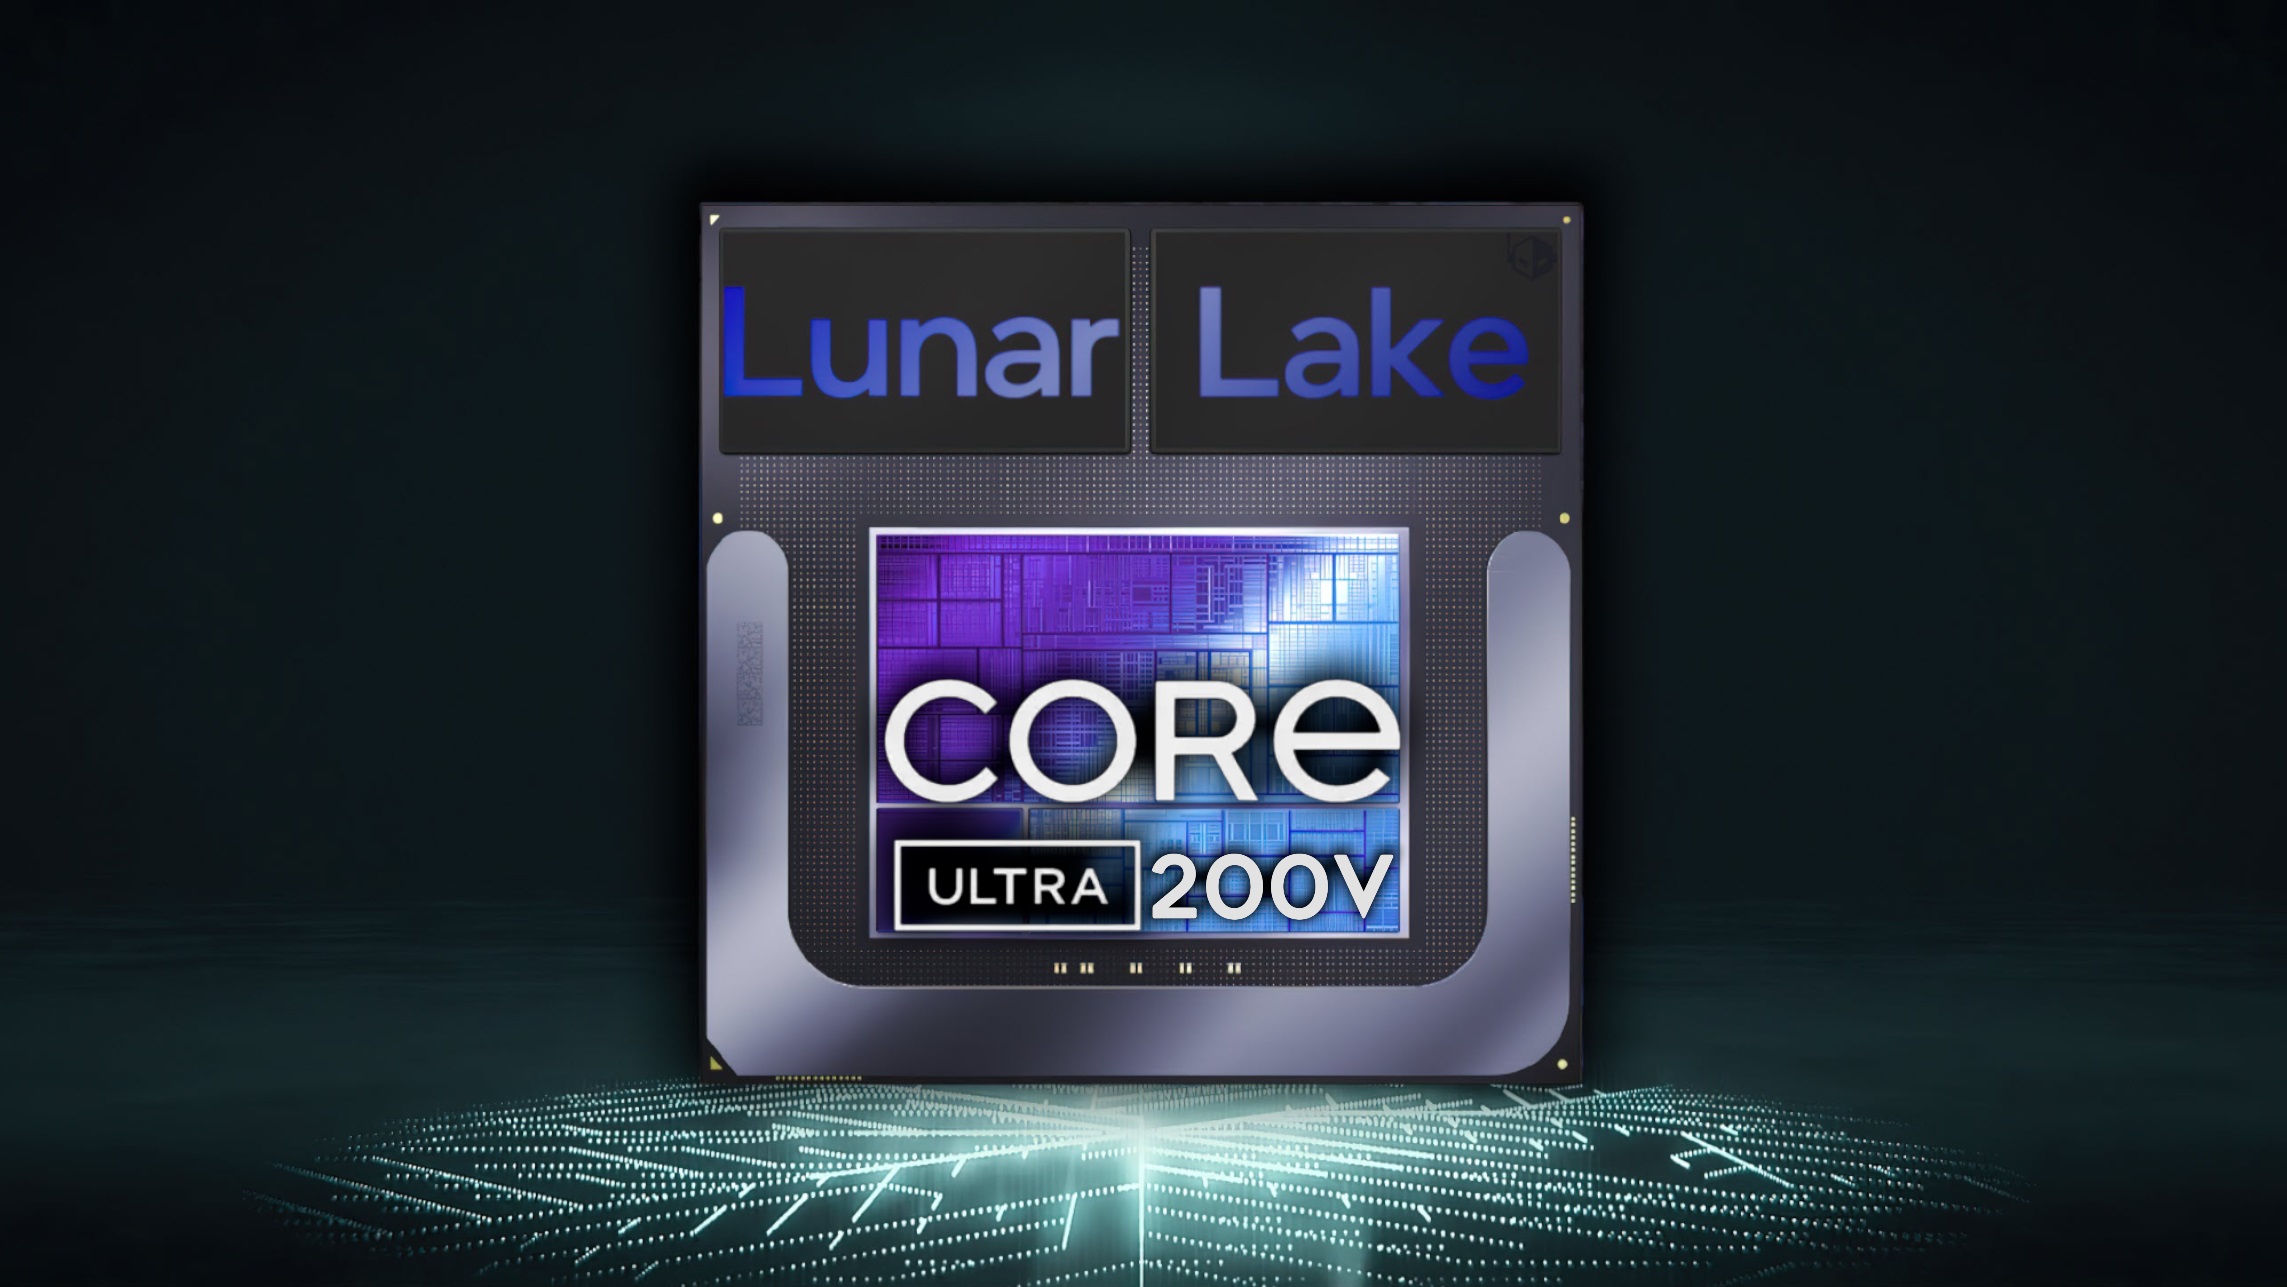 Intel Lunar Lake "Core Ultra 200V" CPU Spotted In Next-Gen HP Spectre x360 Laptop, Strong Battlemage "Xe2" Arc iGPU Performance